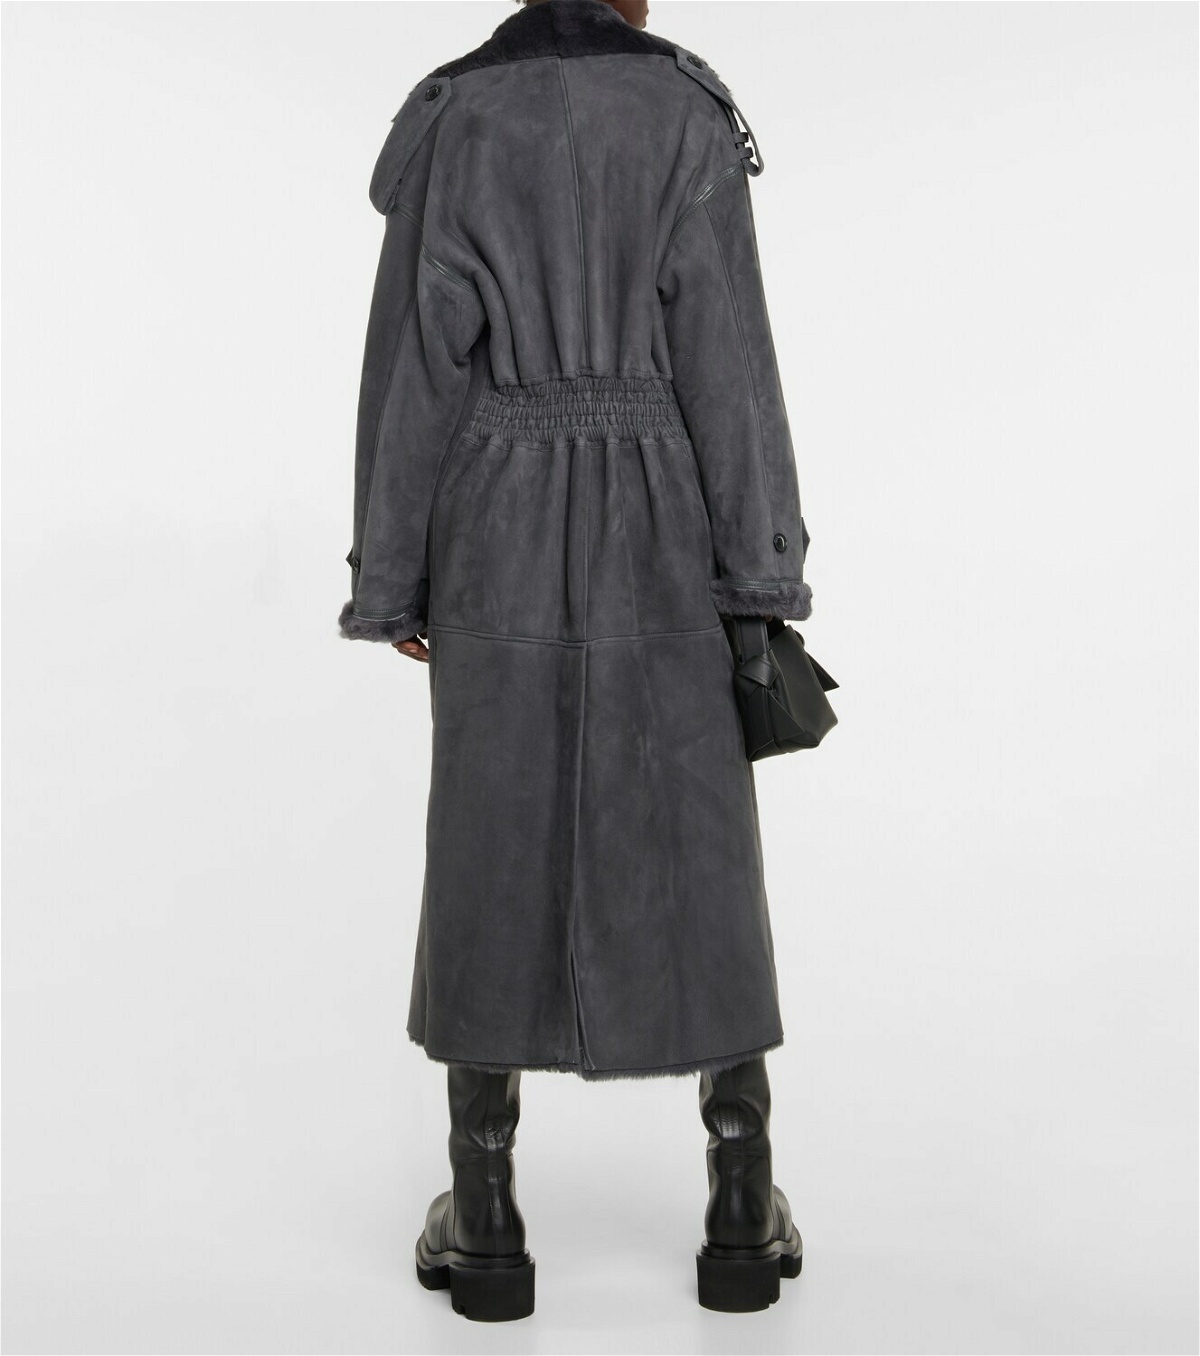 The Mannei Jordan shearling-lined coat